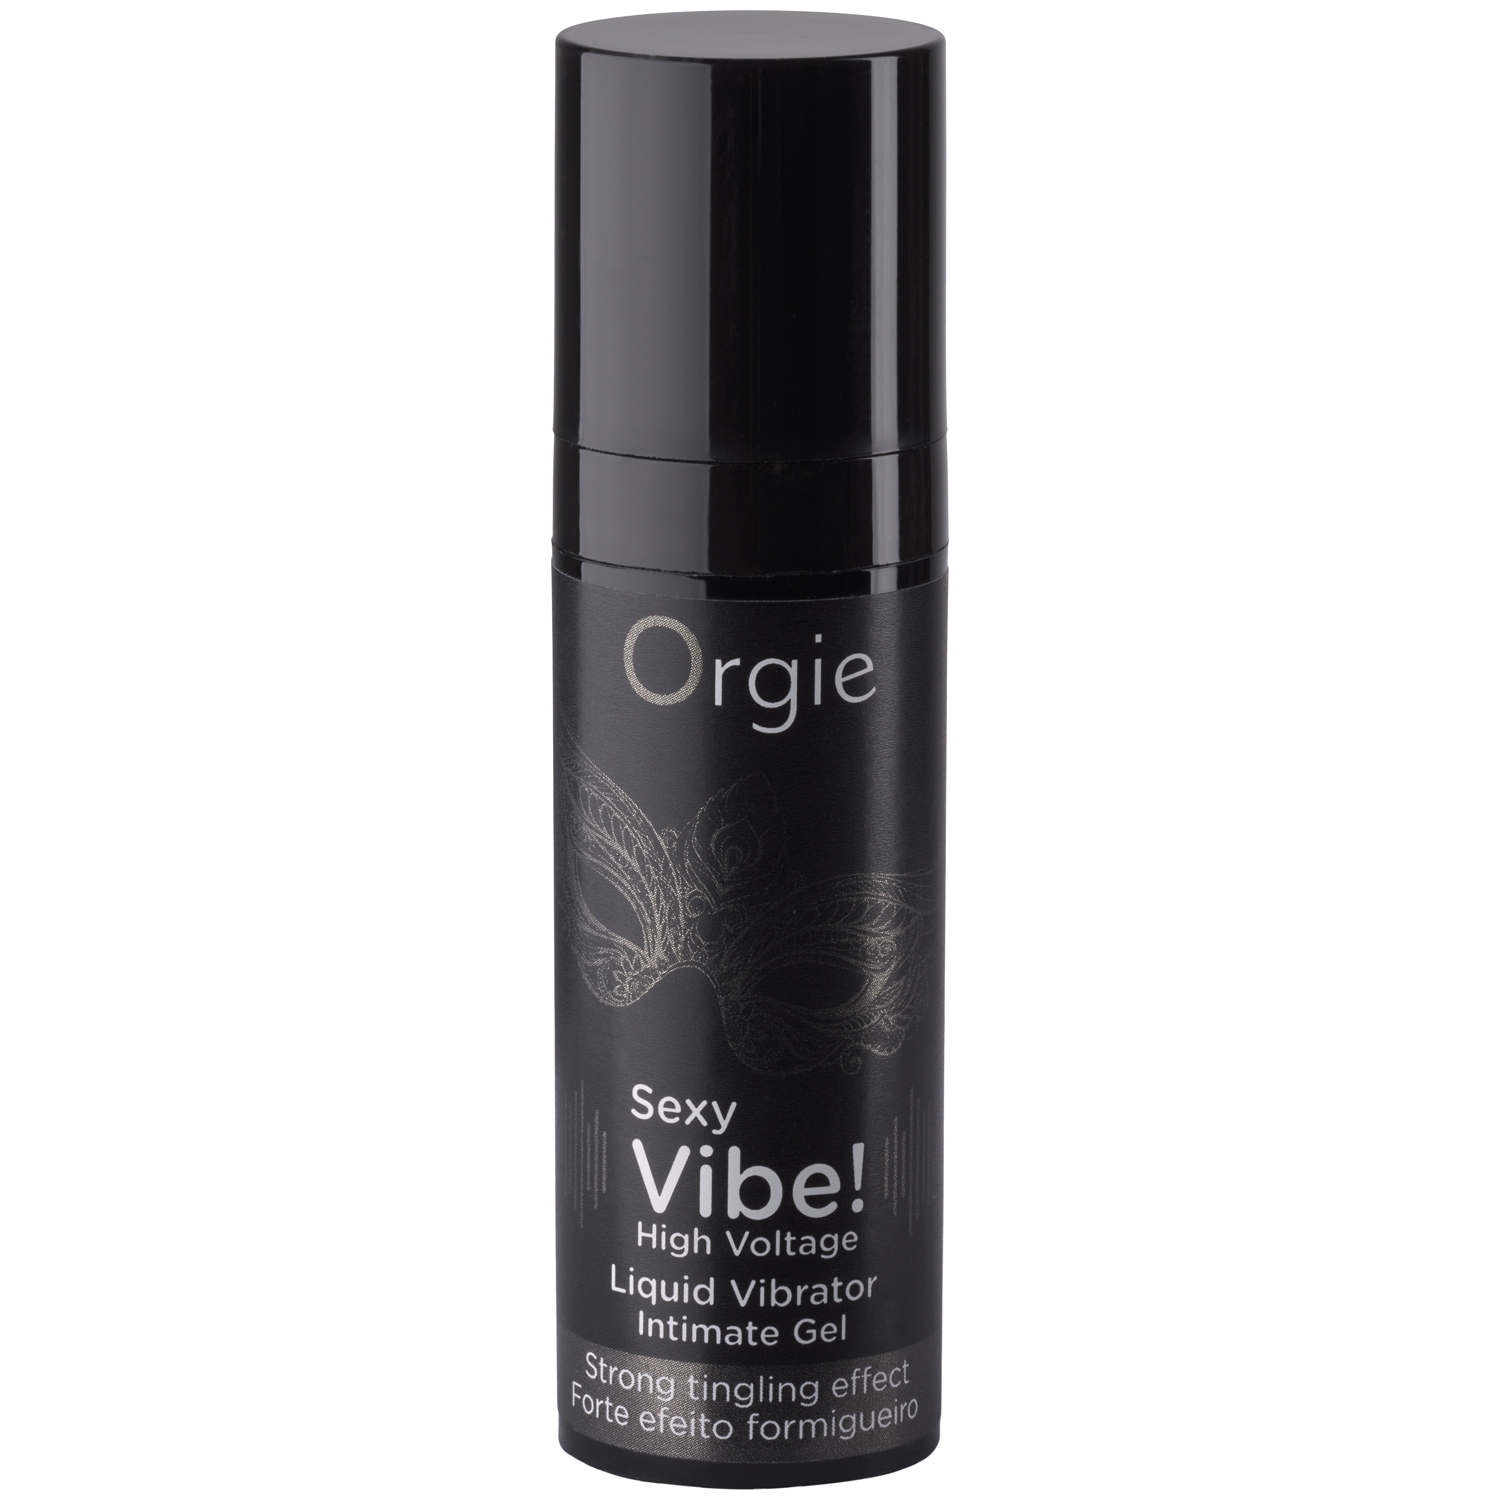 Orgie Sexy Vibe! High Voltage Liquid Vibrator Intimgel 15 ml - Black thumbnail